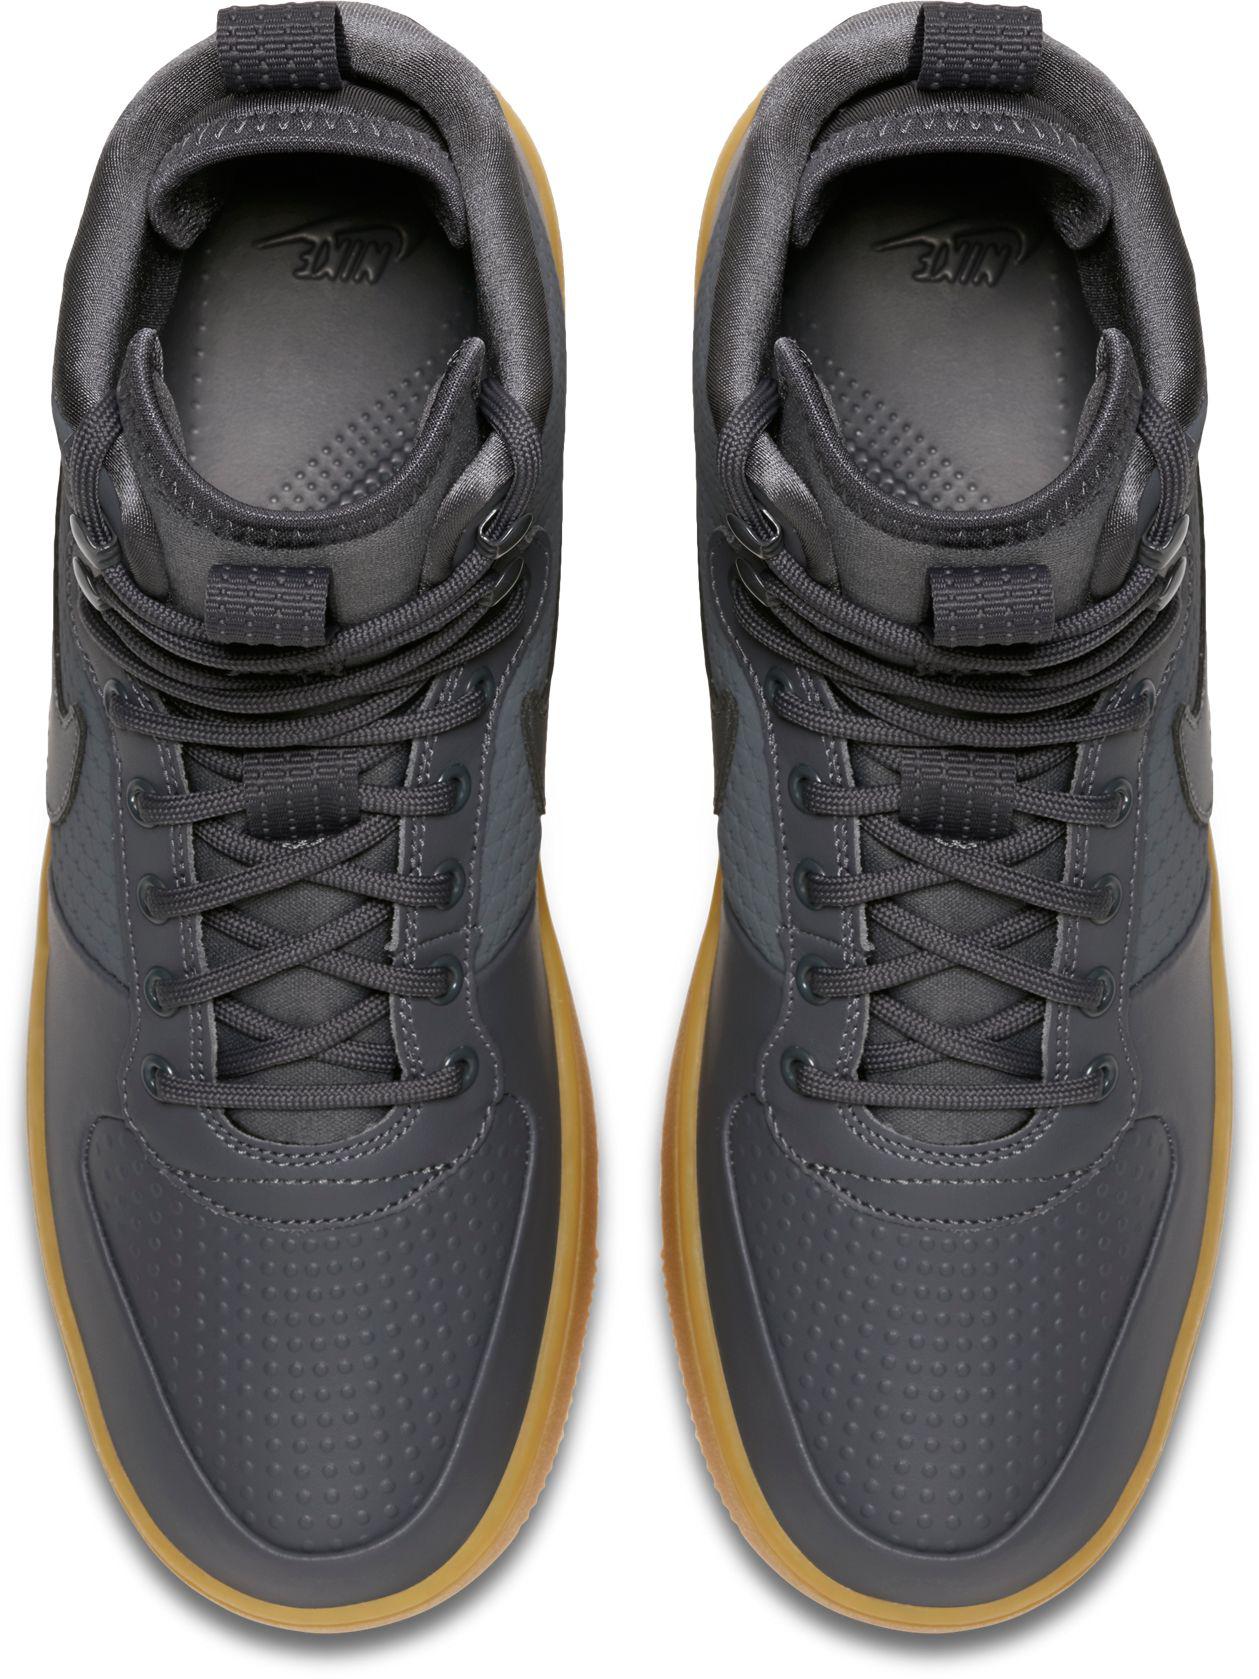 Nike Neoprene Court Borough Mid Winter Shoes In Dark Grey Gray For Men Lyst